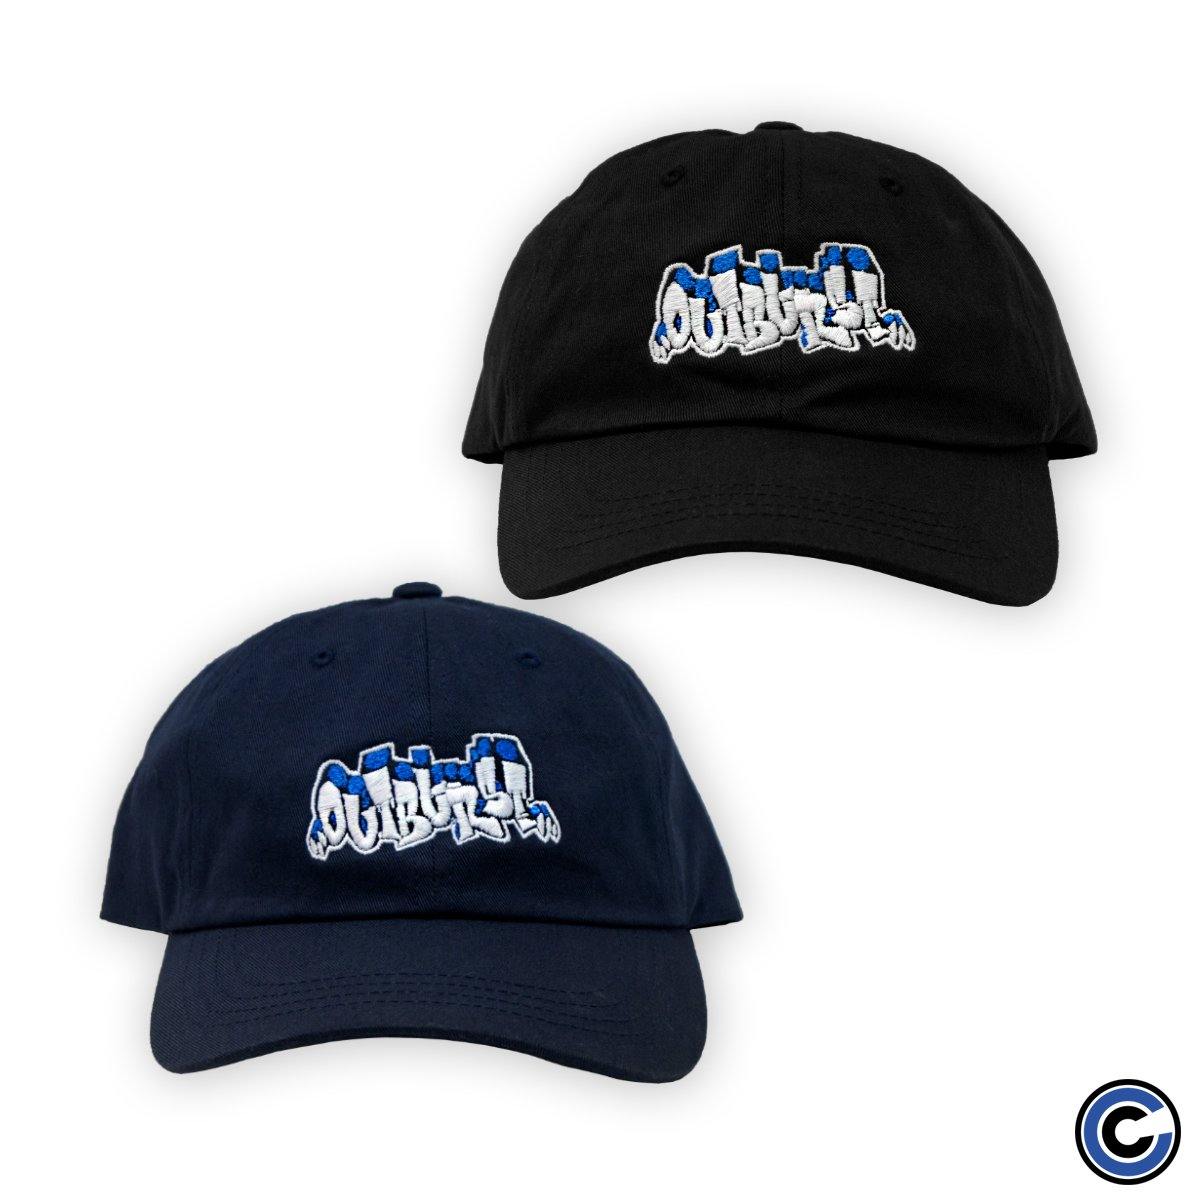 Buy – Outburst "Bubble Logo" Hat – Band & Music Merch – Cold Cuts Merch